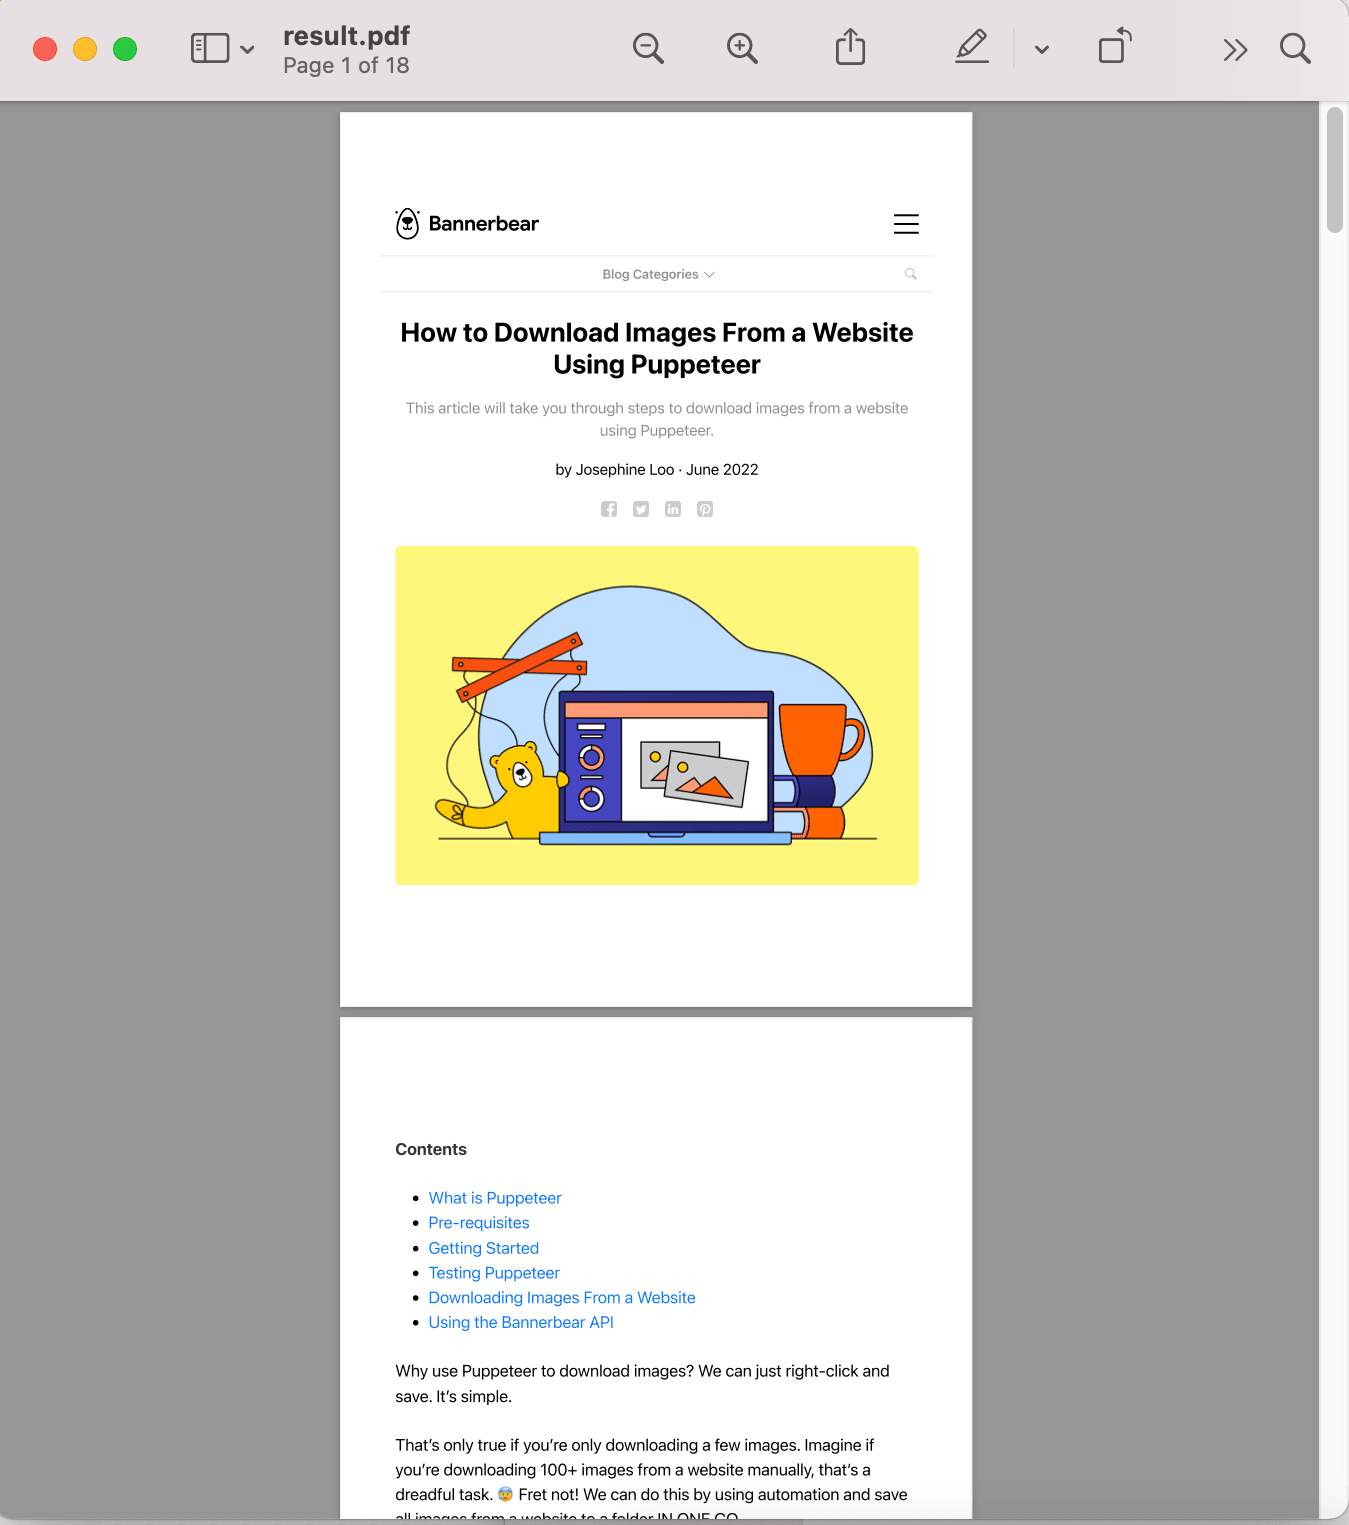 screenshot of PDF generated using Puppeteer